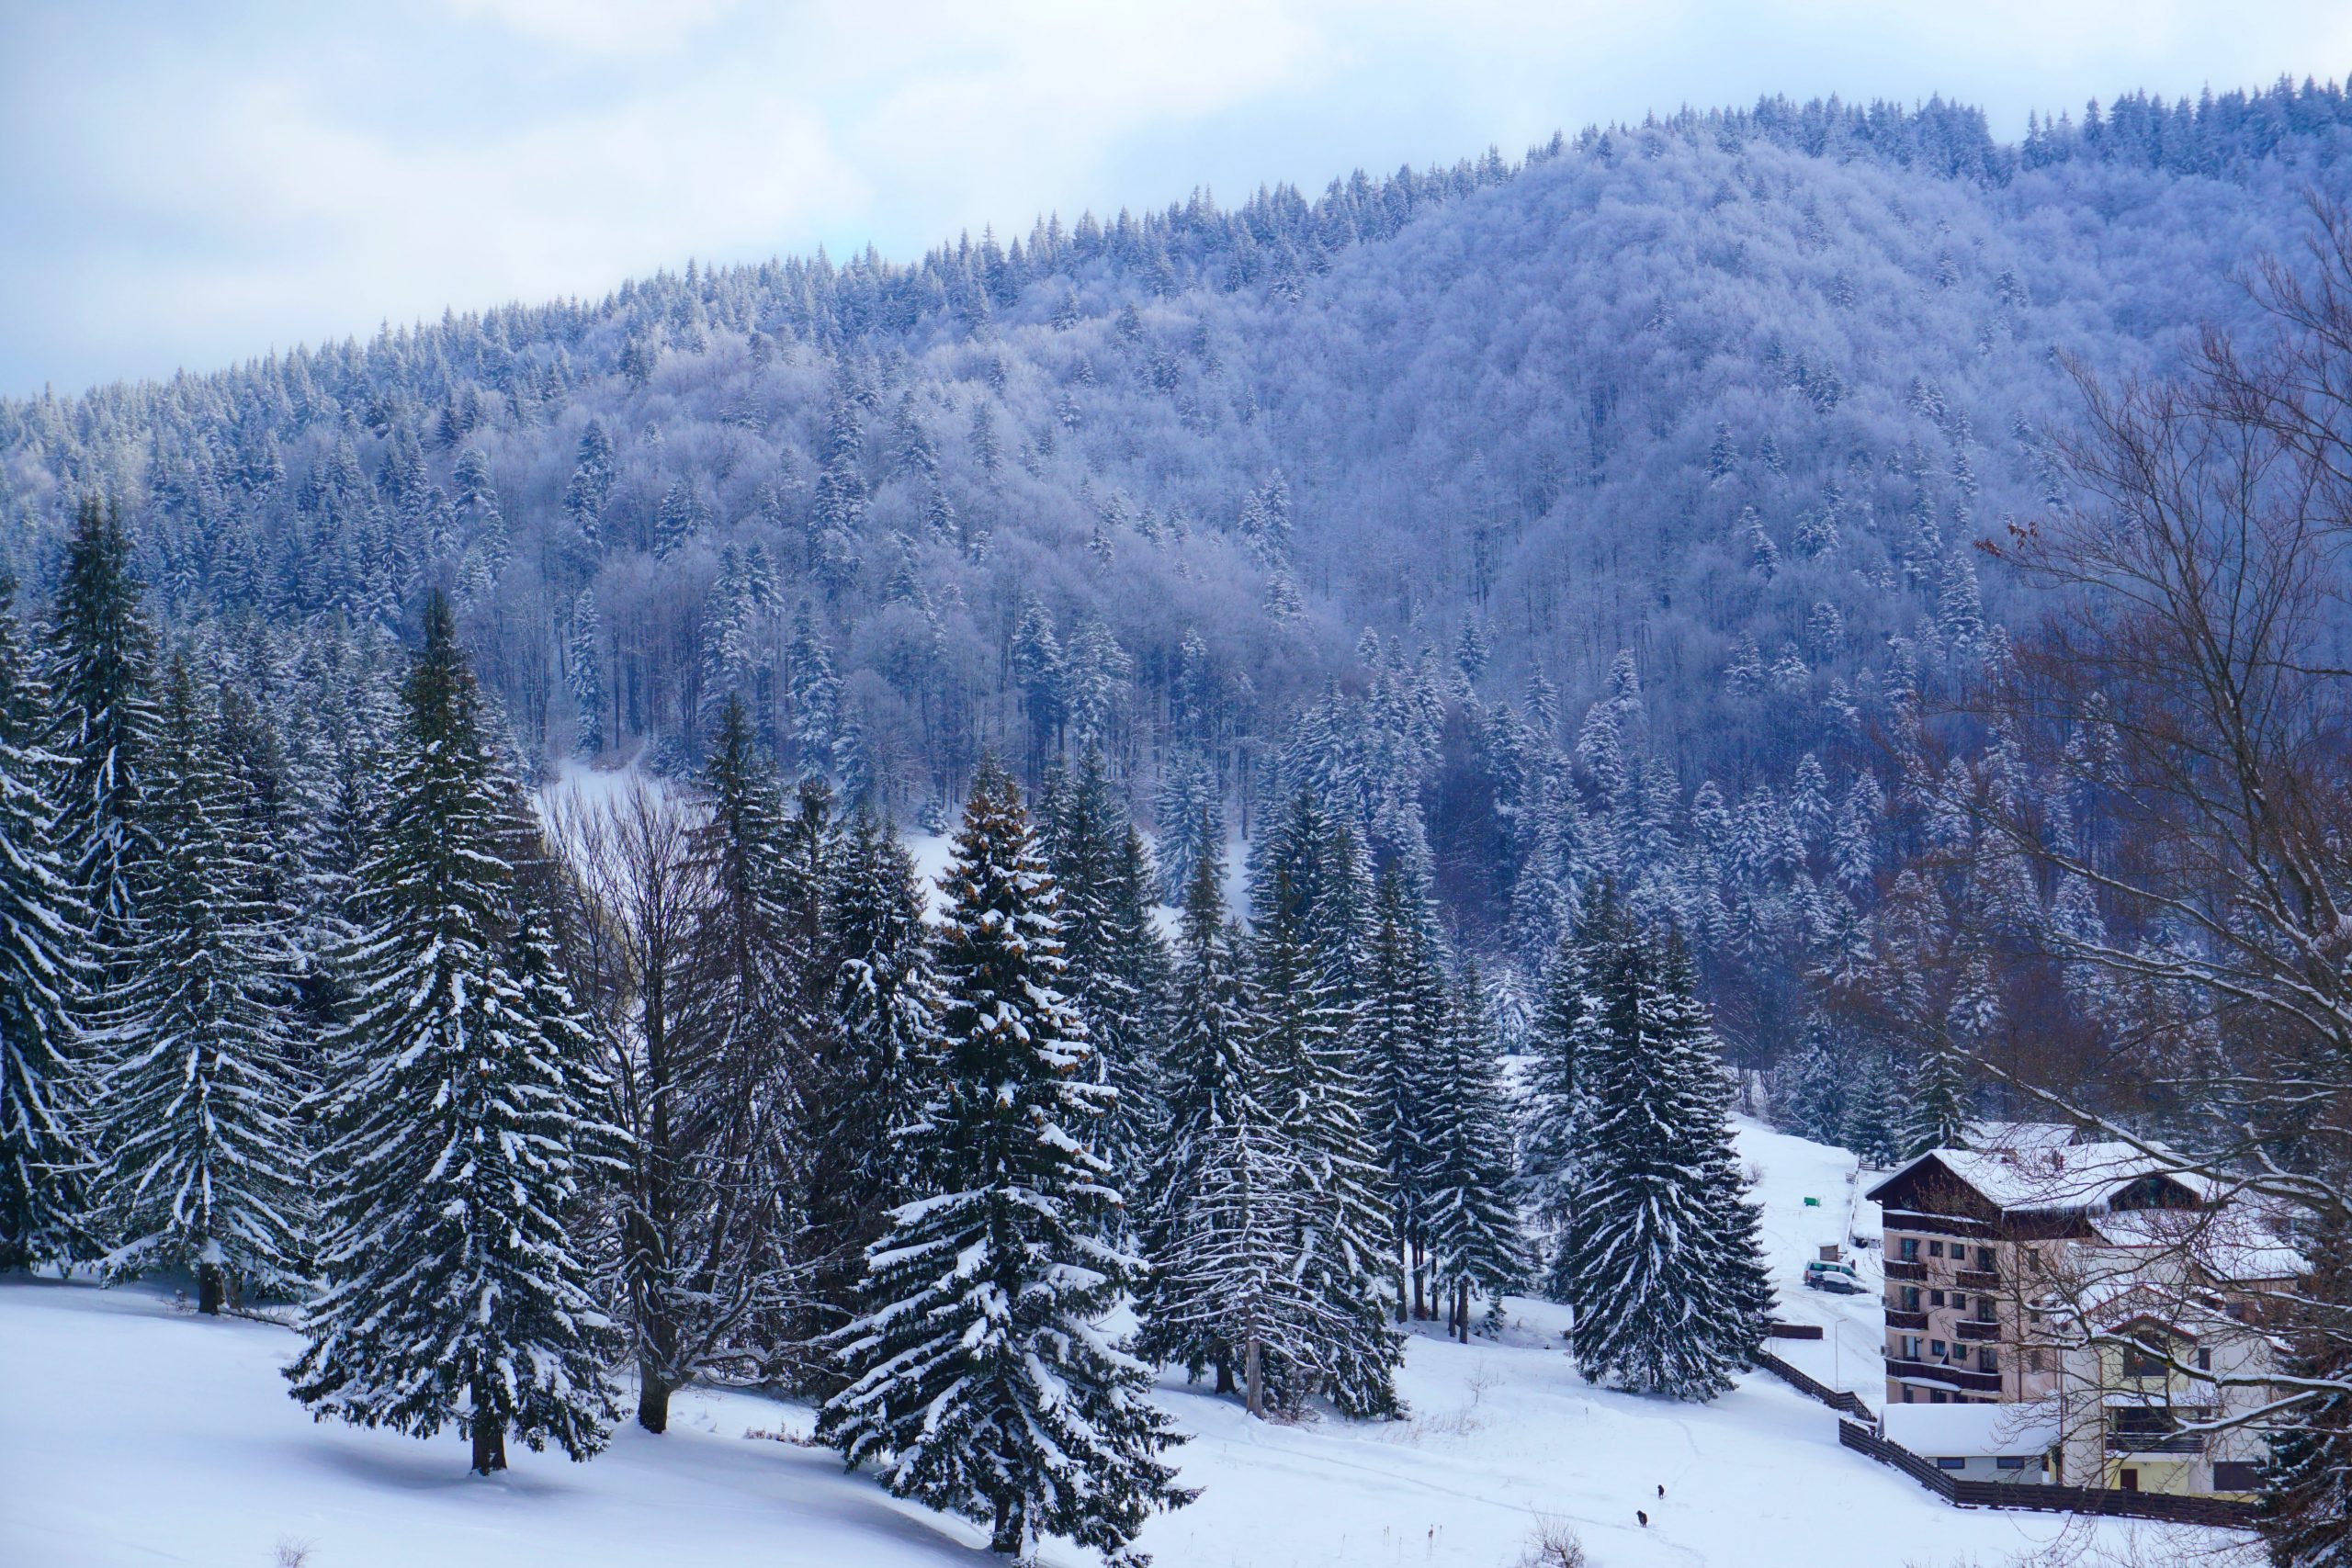 Romanian Mountains Evergreen Covered Snow near Poiana Brasov